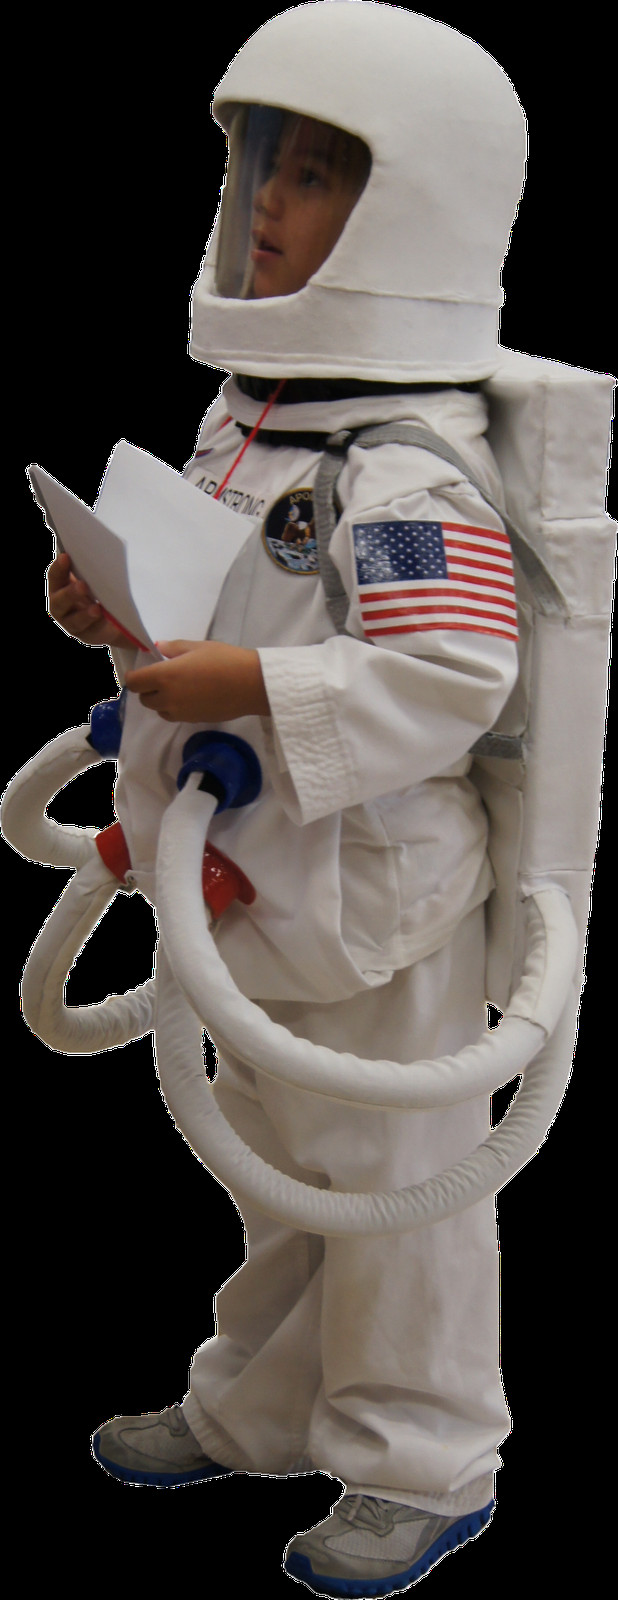 DIY Space Costume
 ivetastic DIY armstrong astronaut suit